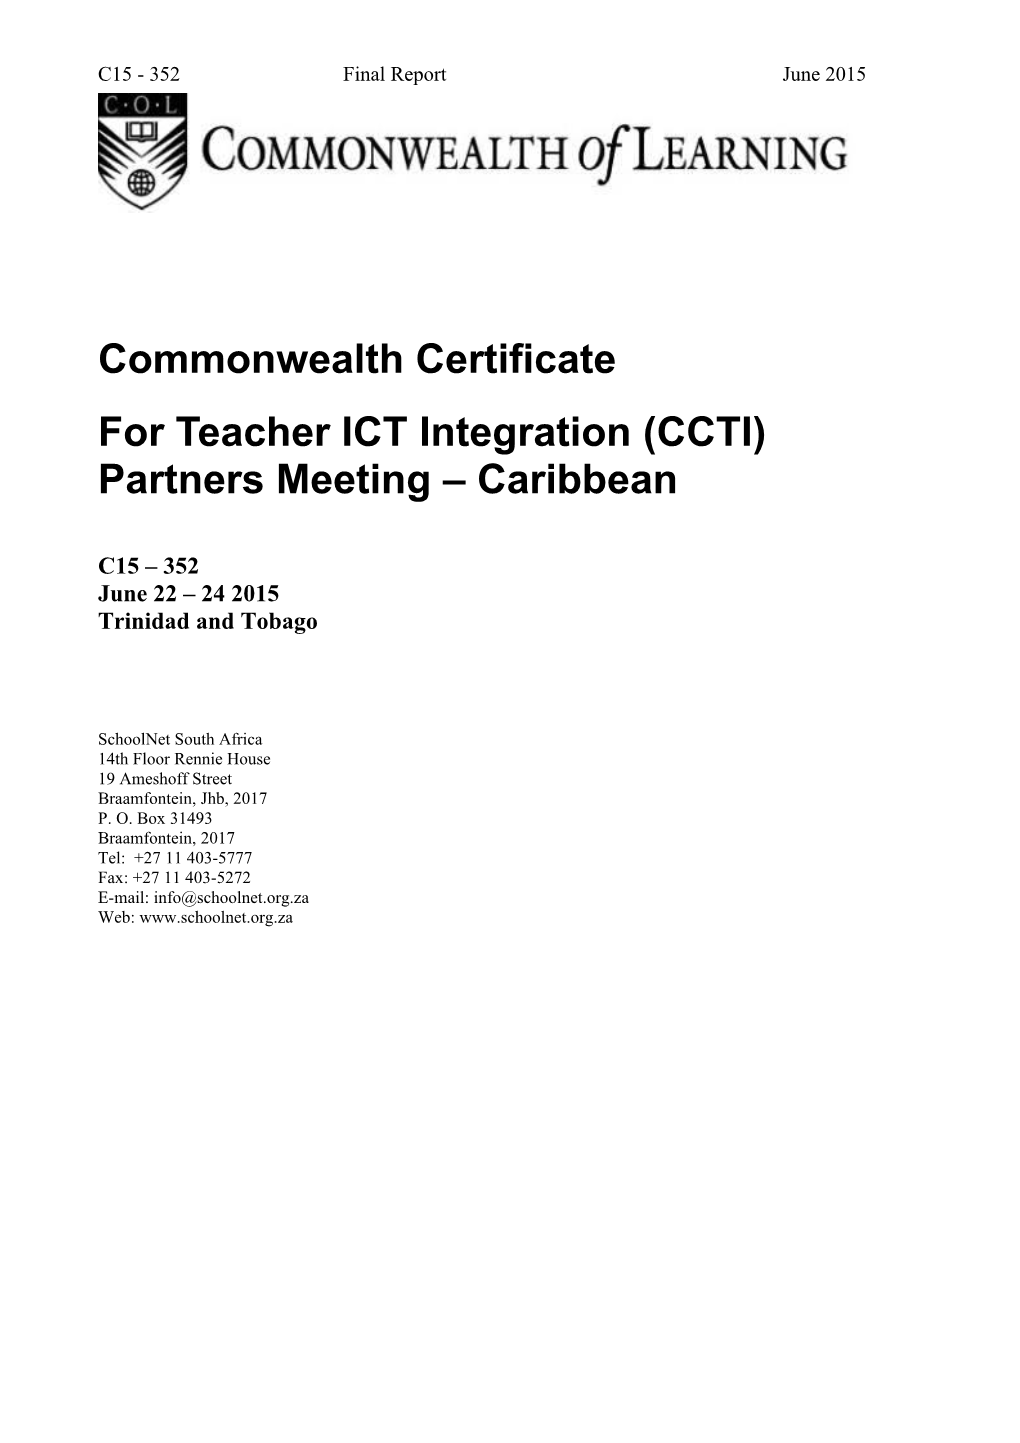 For Teacher ICT Integration (CCTI) Partners Meeting Caribbean